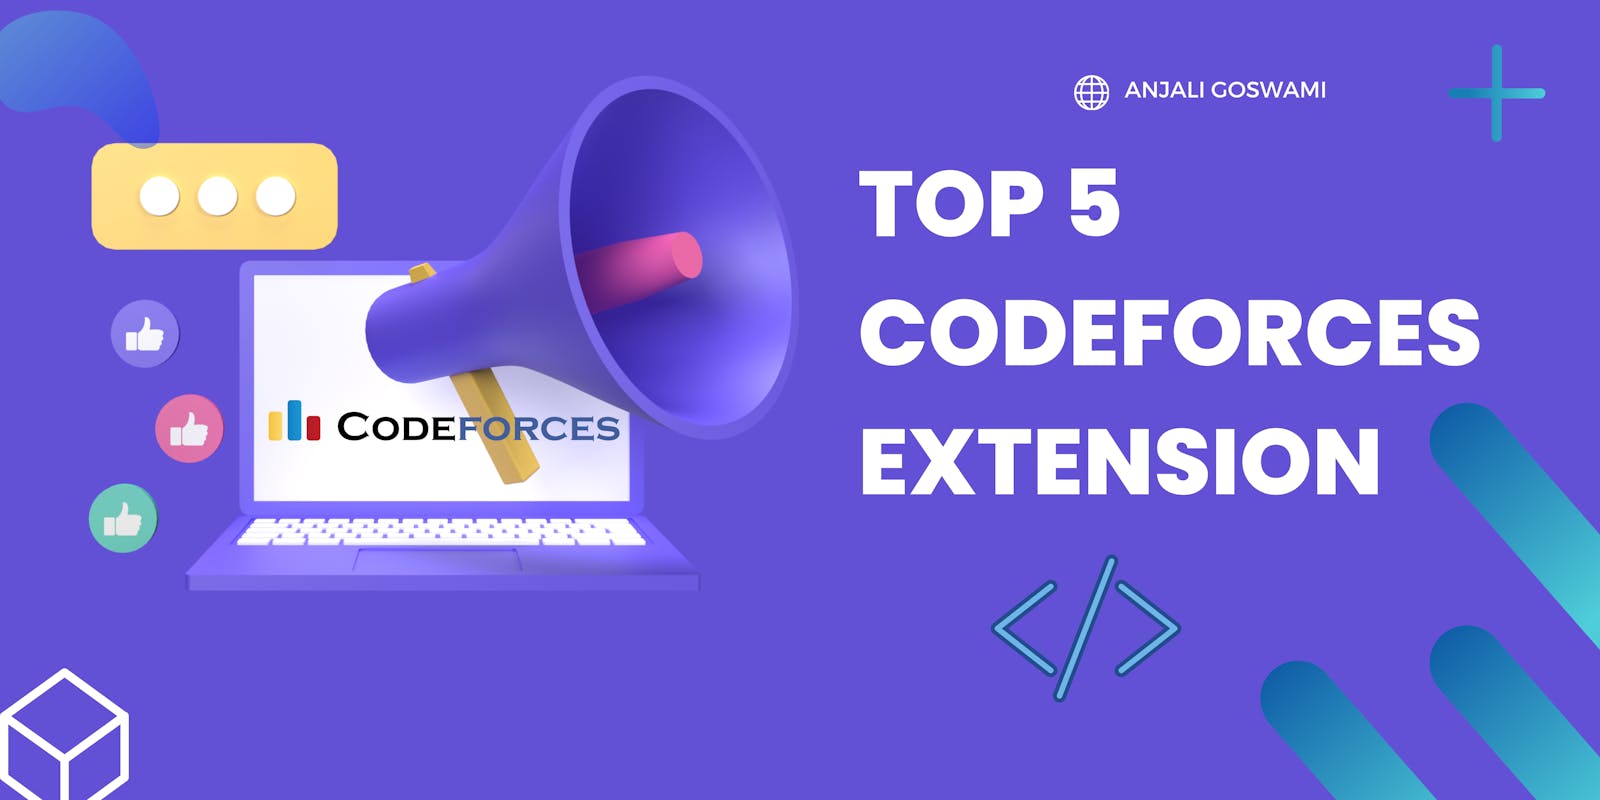 🎲 Top 5 CodeForces Extension: